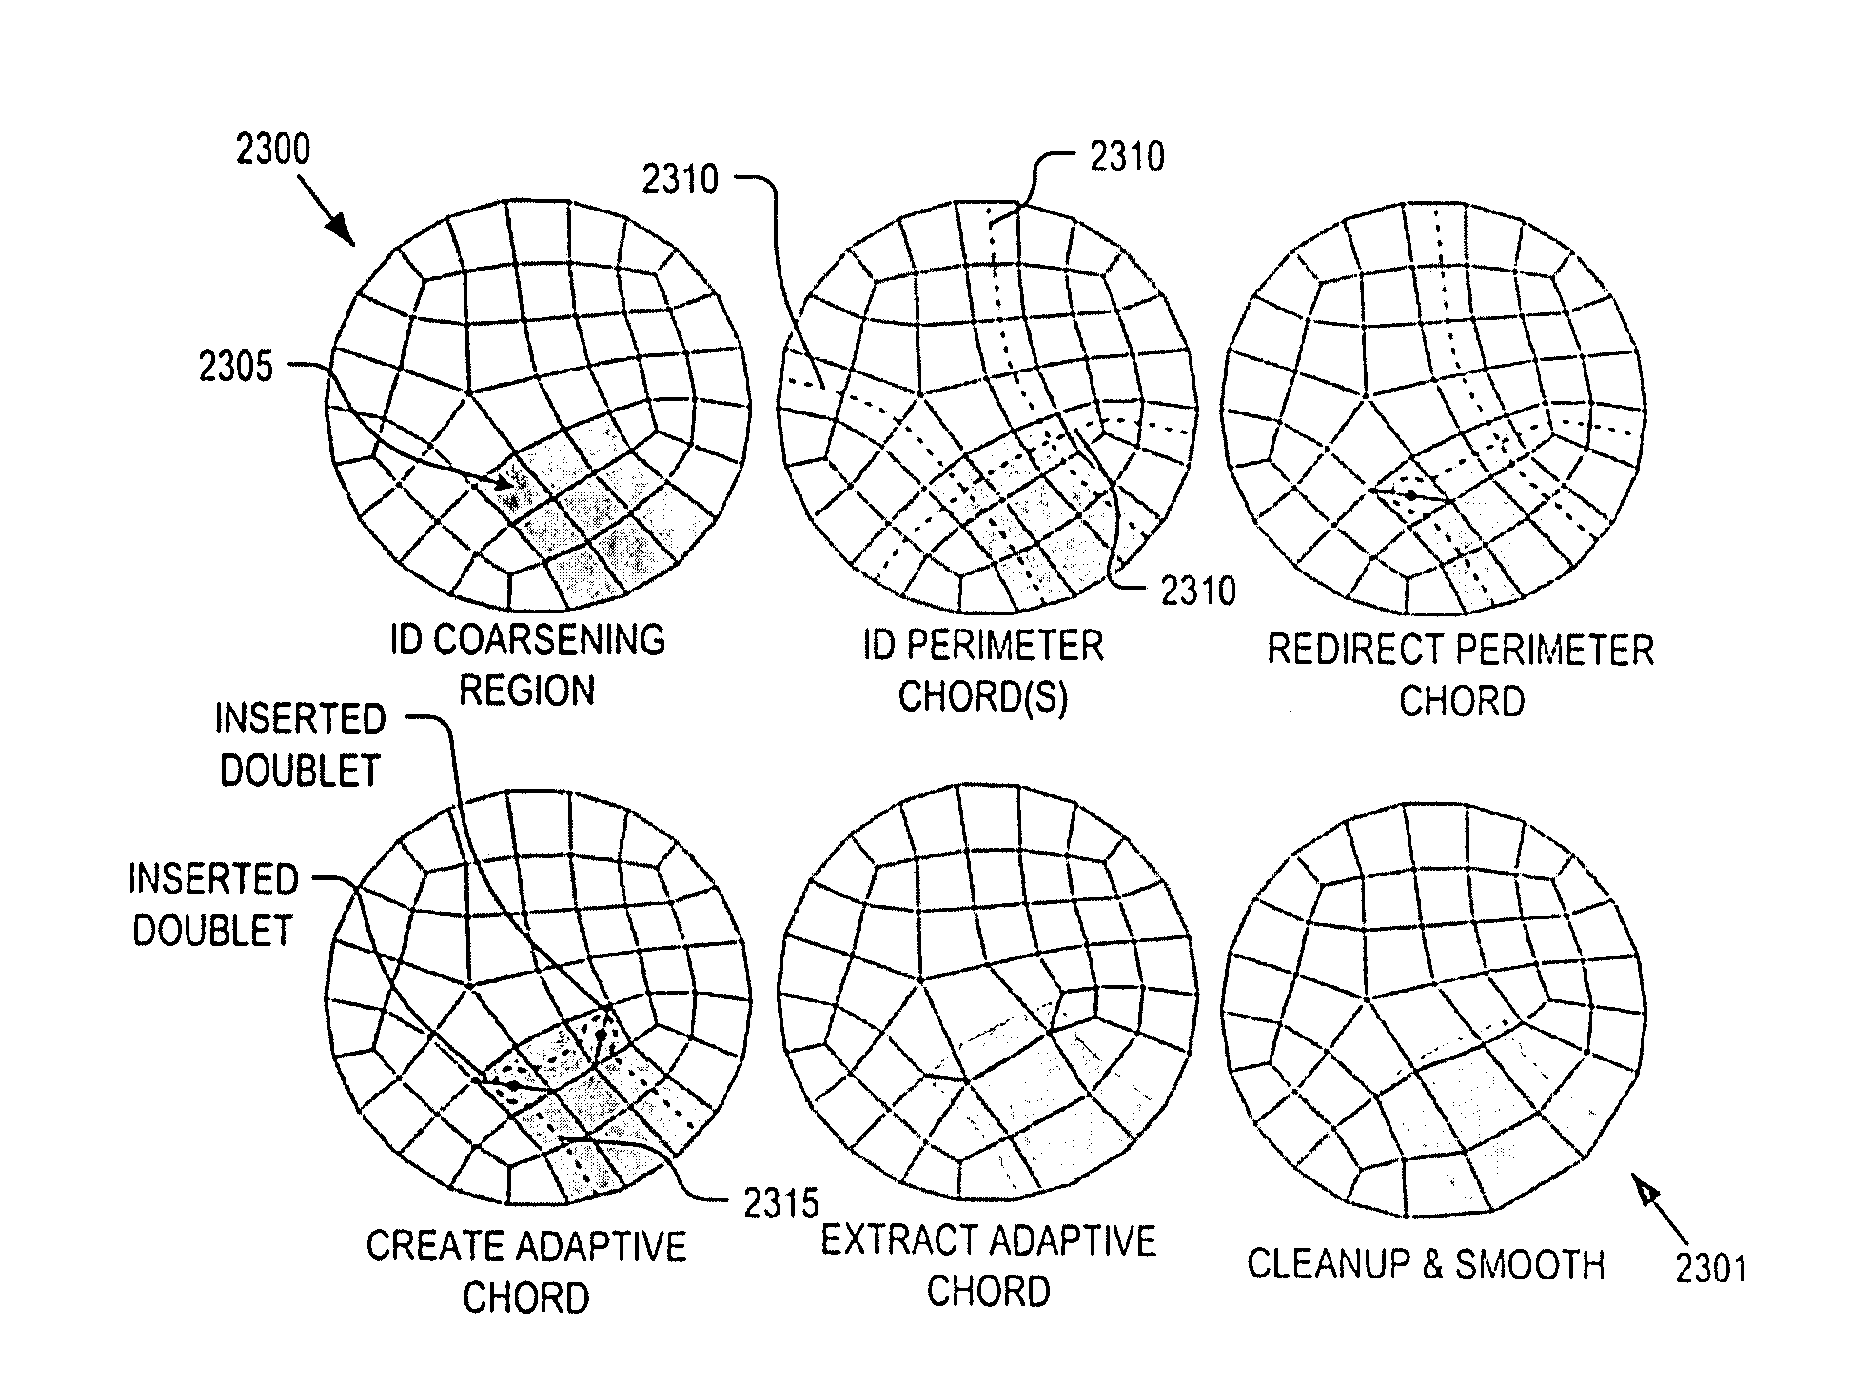 Quadrilateral/hexahedral finite element mesh coarsening